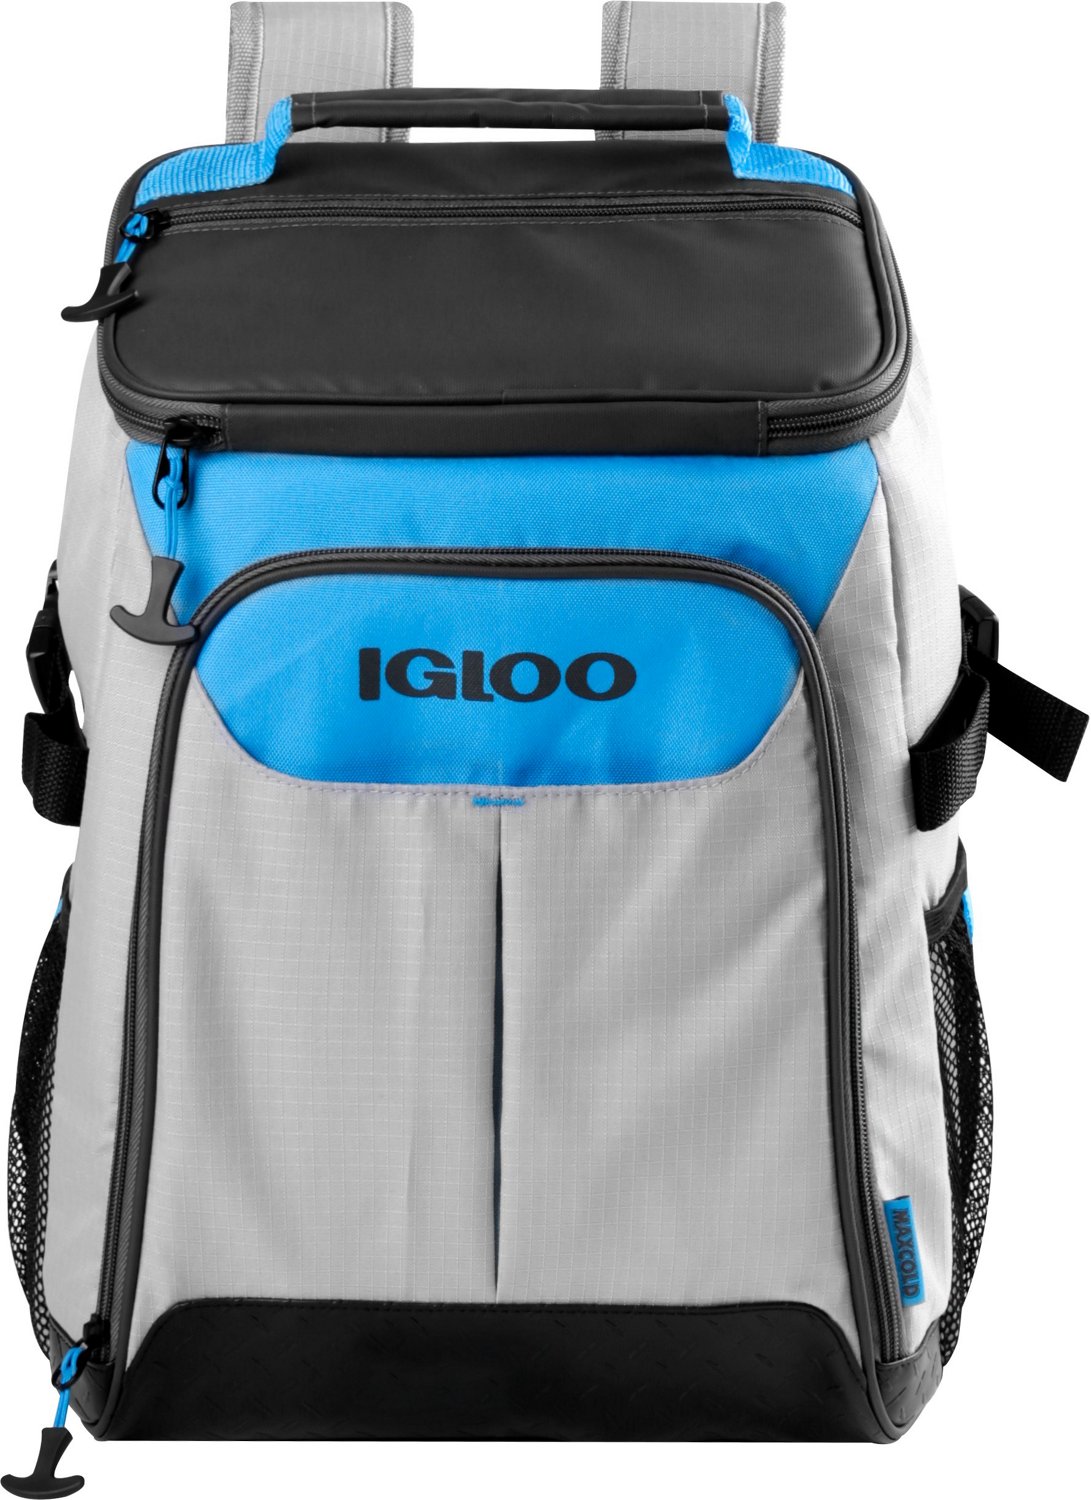 Igloo Trek Cooler Backpack | Academy